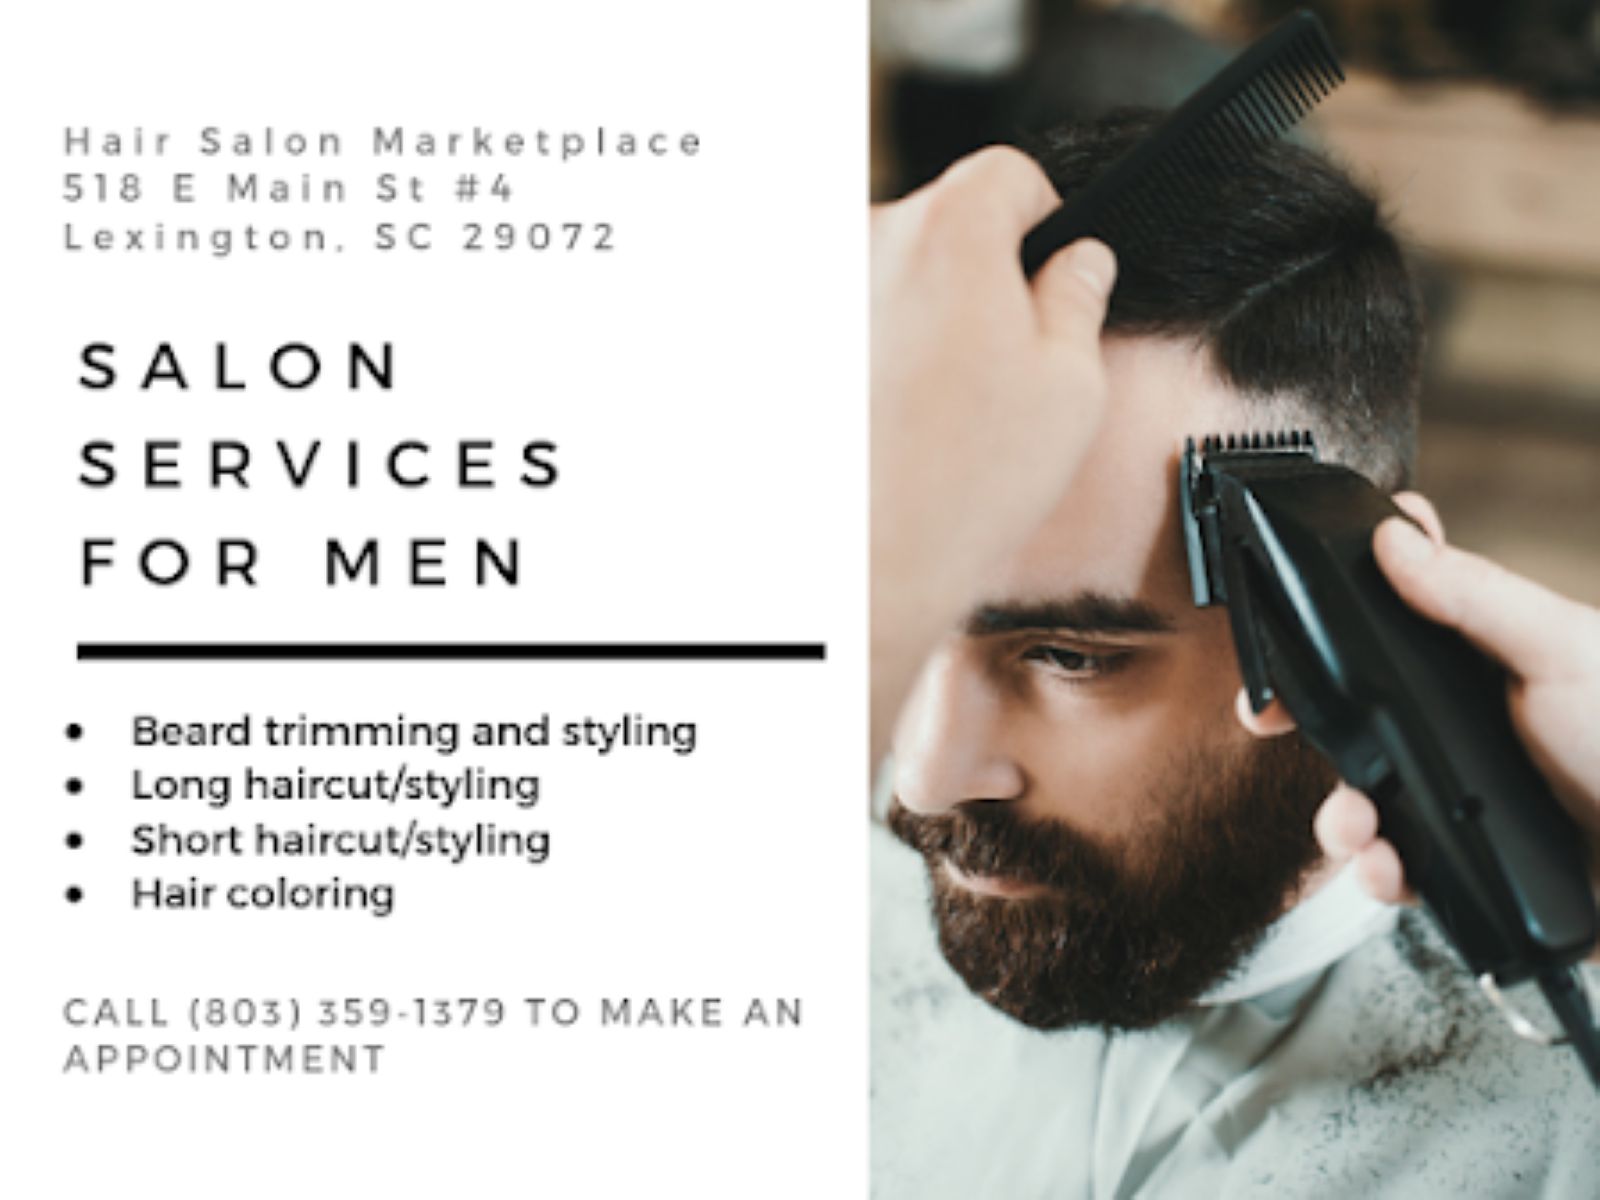 Hair Salon Marketplace